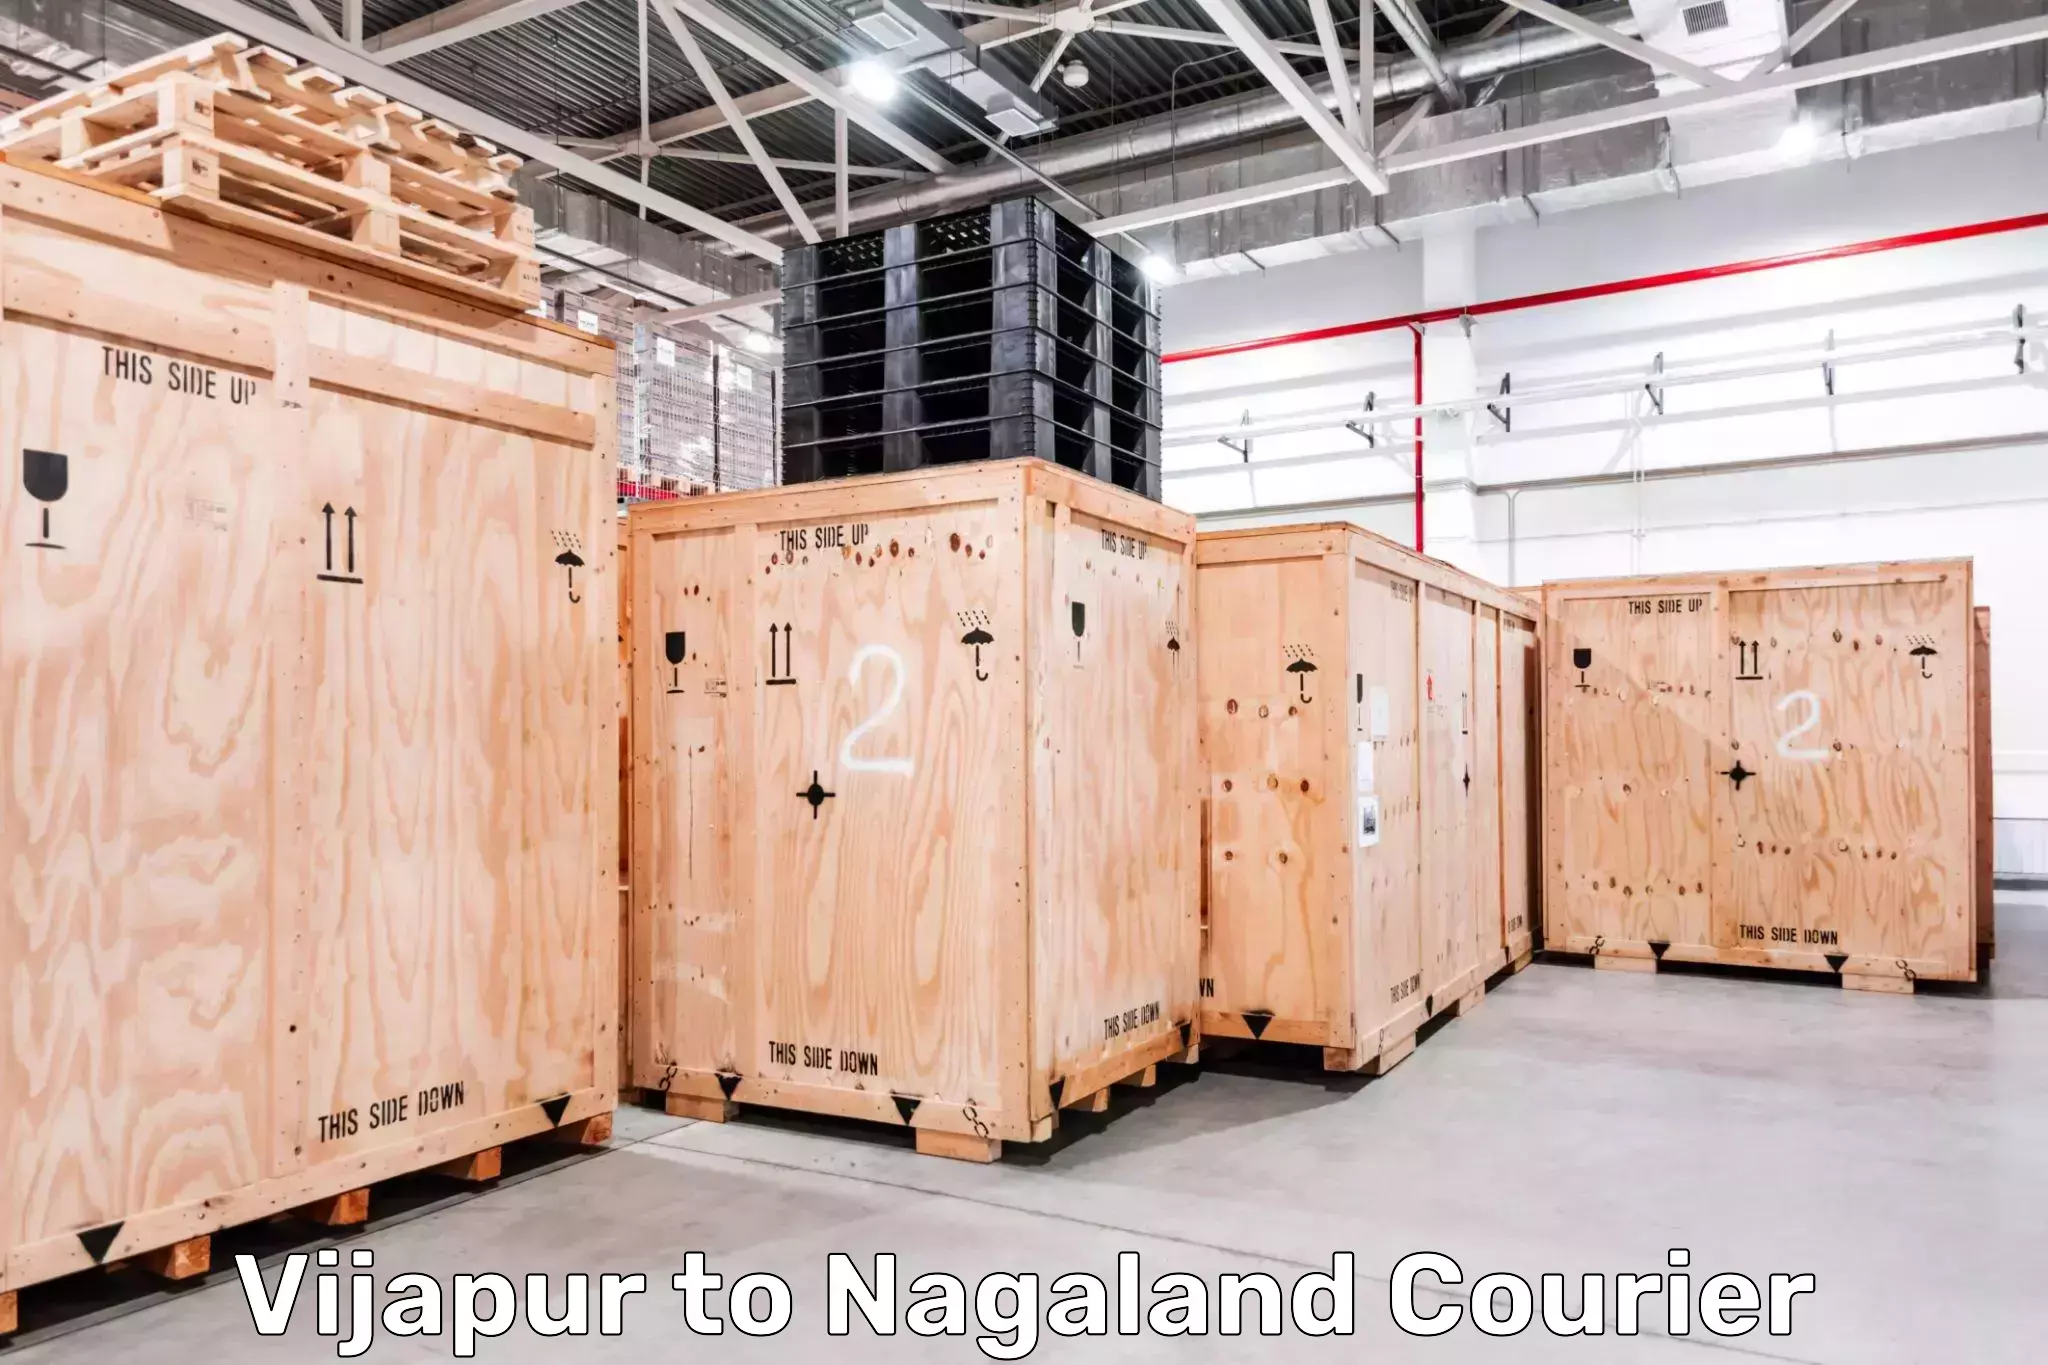 Express delivery network Vijapur to Nagaland